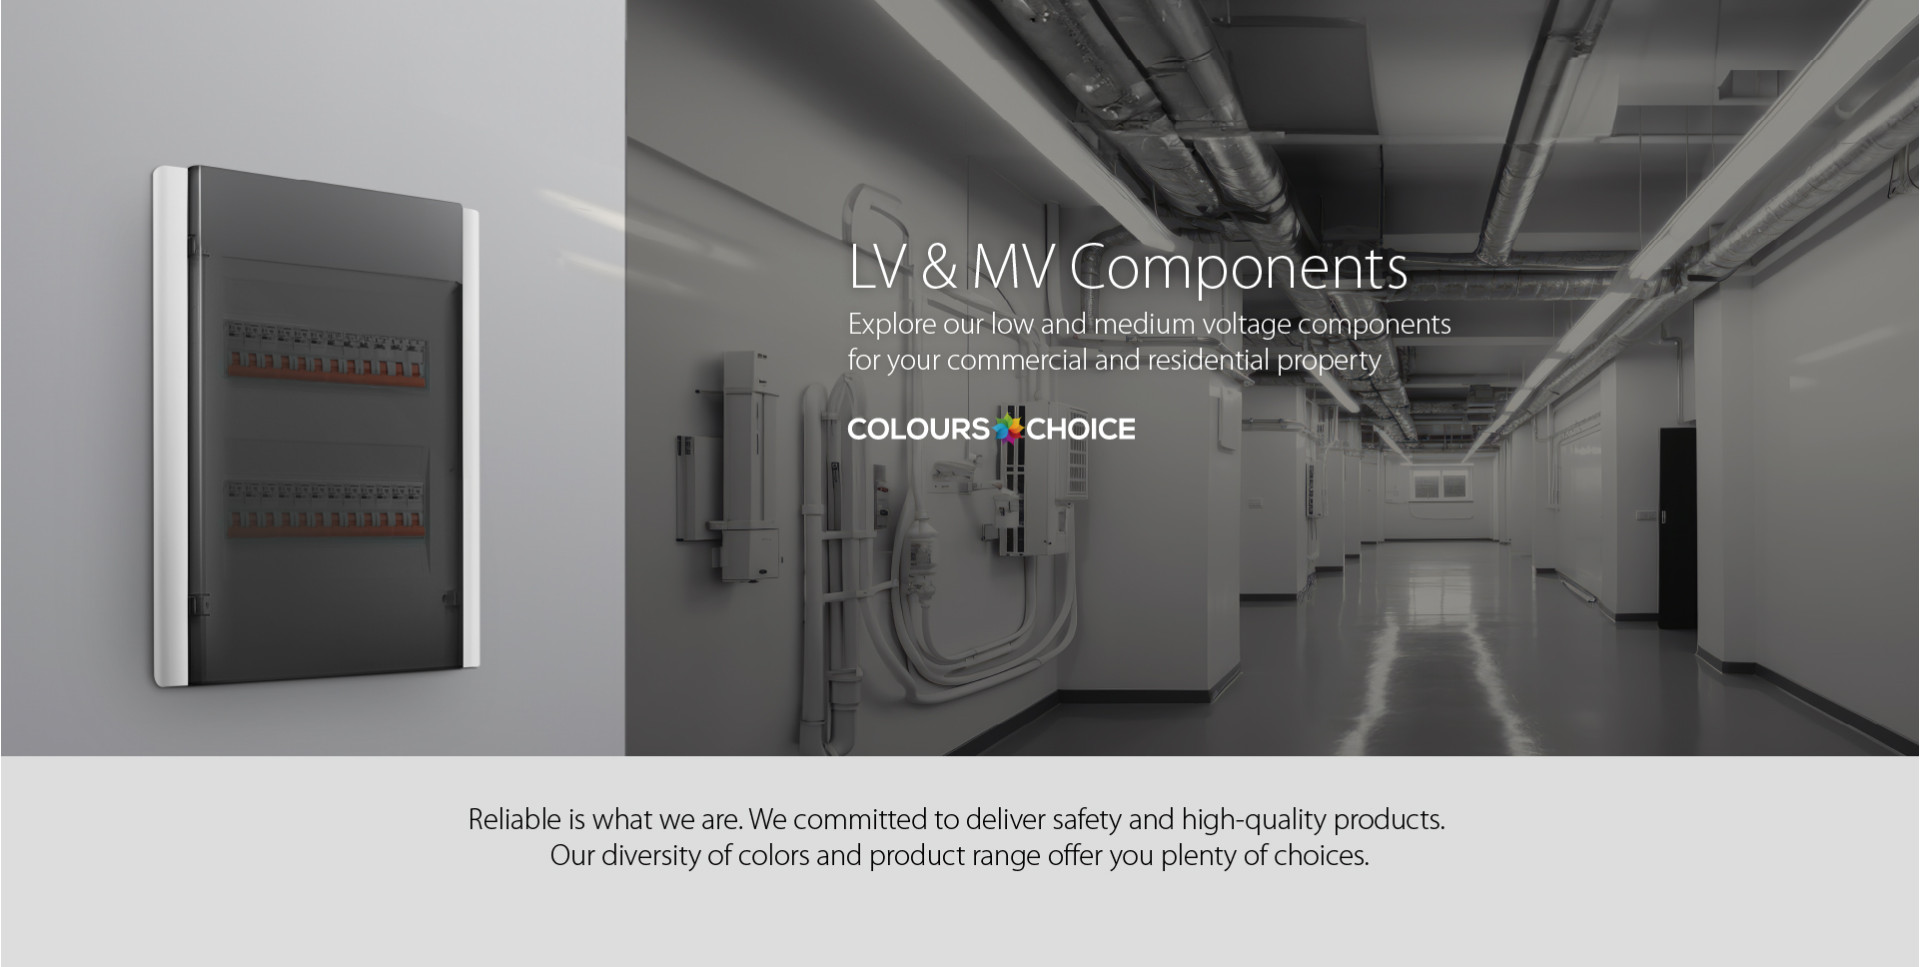 LV & MV Components